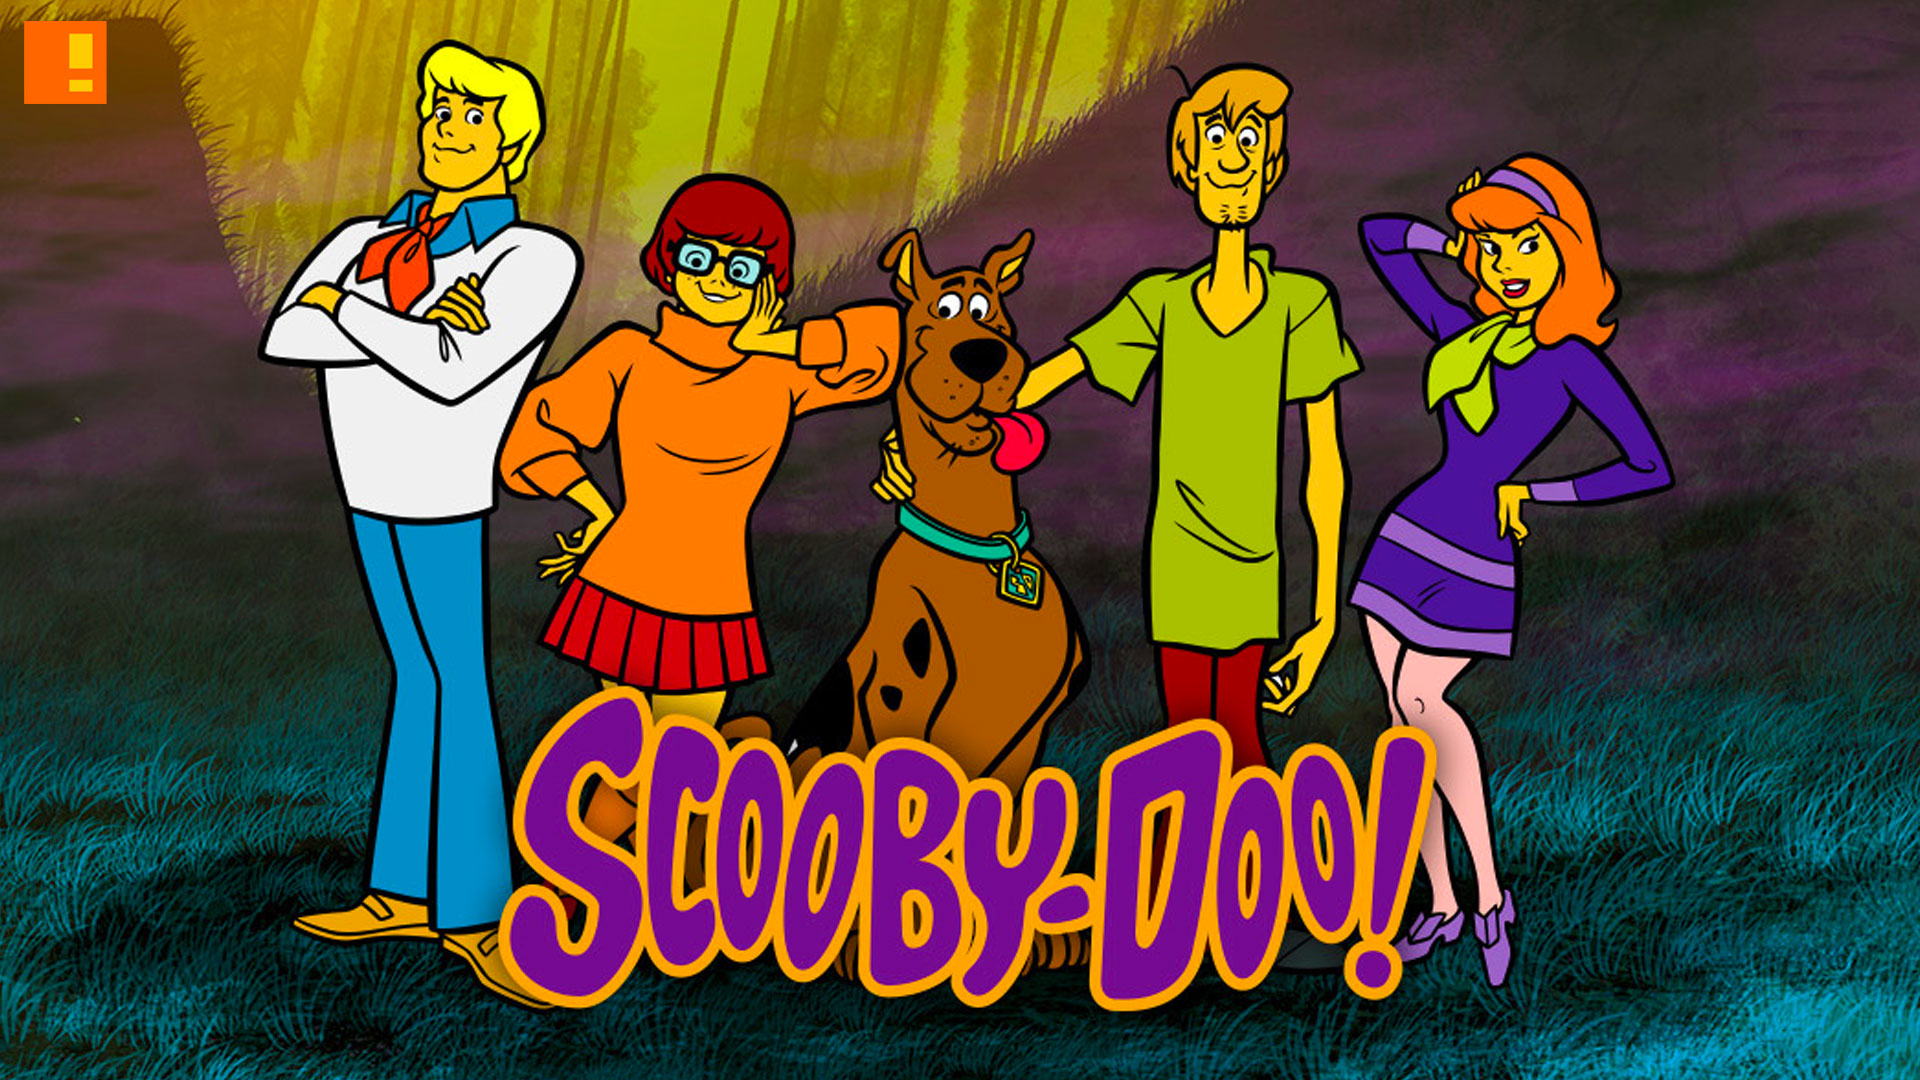 DC Comics reveals drastic changes to “Scooby Doo” + Hanna-Barbera ...